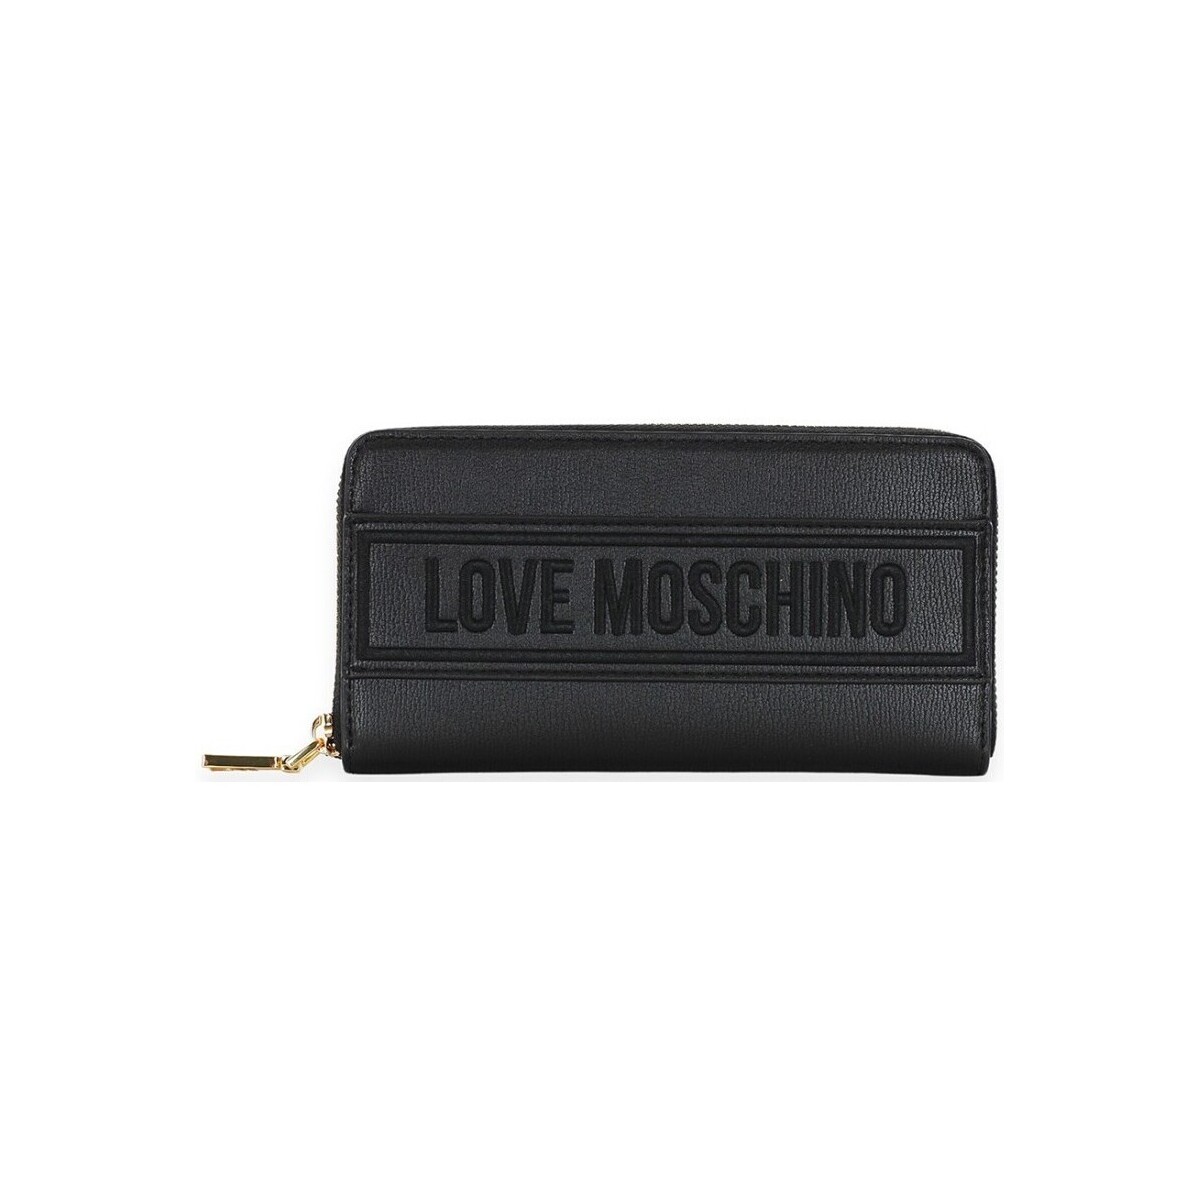 Love Moschino Noir cDaIfOx6